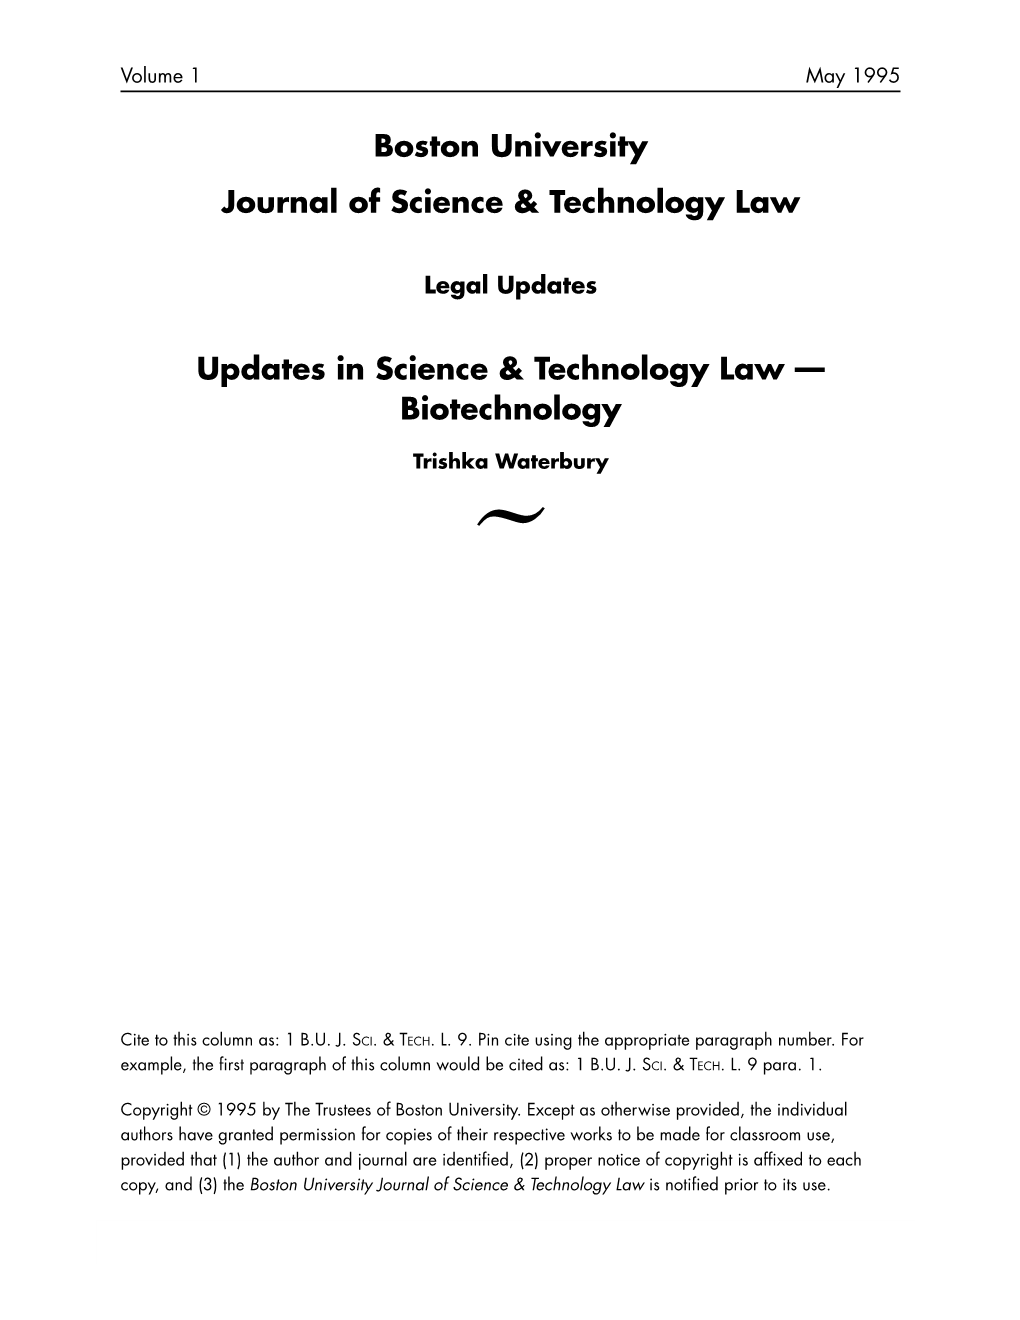 Boston University Journal of Science & Technology Law Updates in Science & Technology Law — Biotechnology